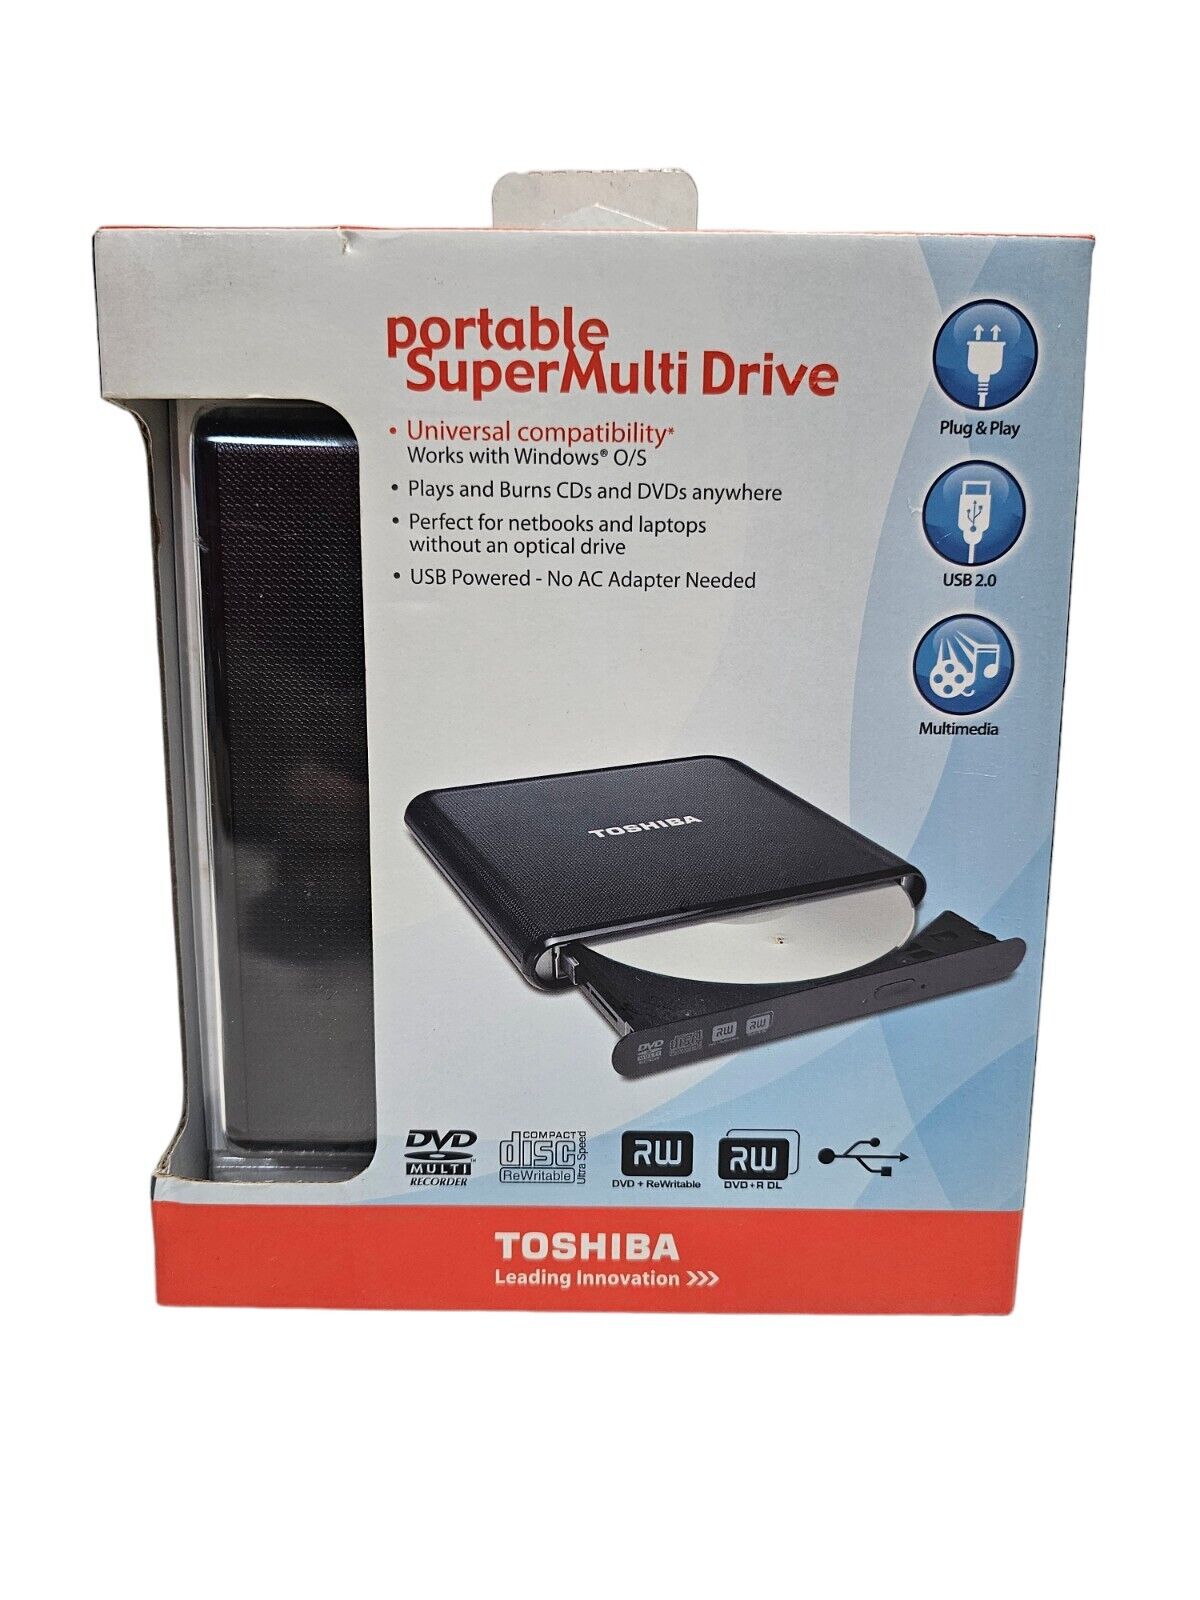 Toshiba Factory sealed  Pa3834u-1DV2 USB 2.0 Portable DVD Super Multi Drive